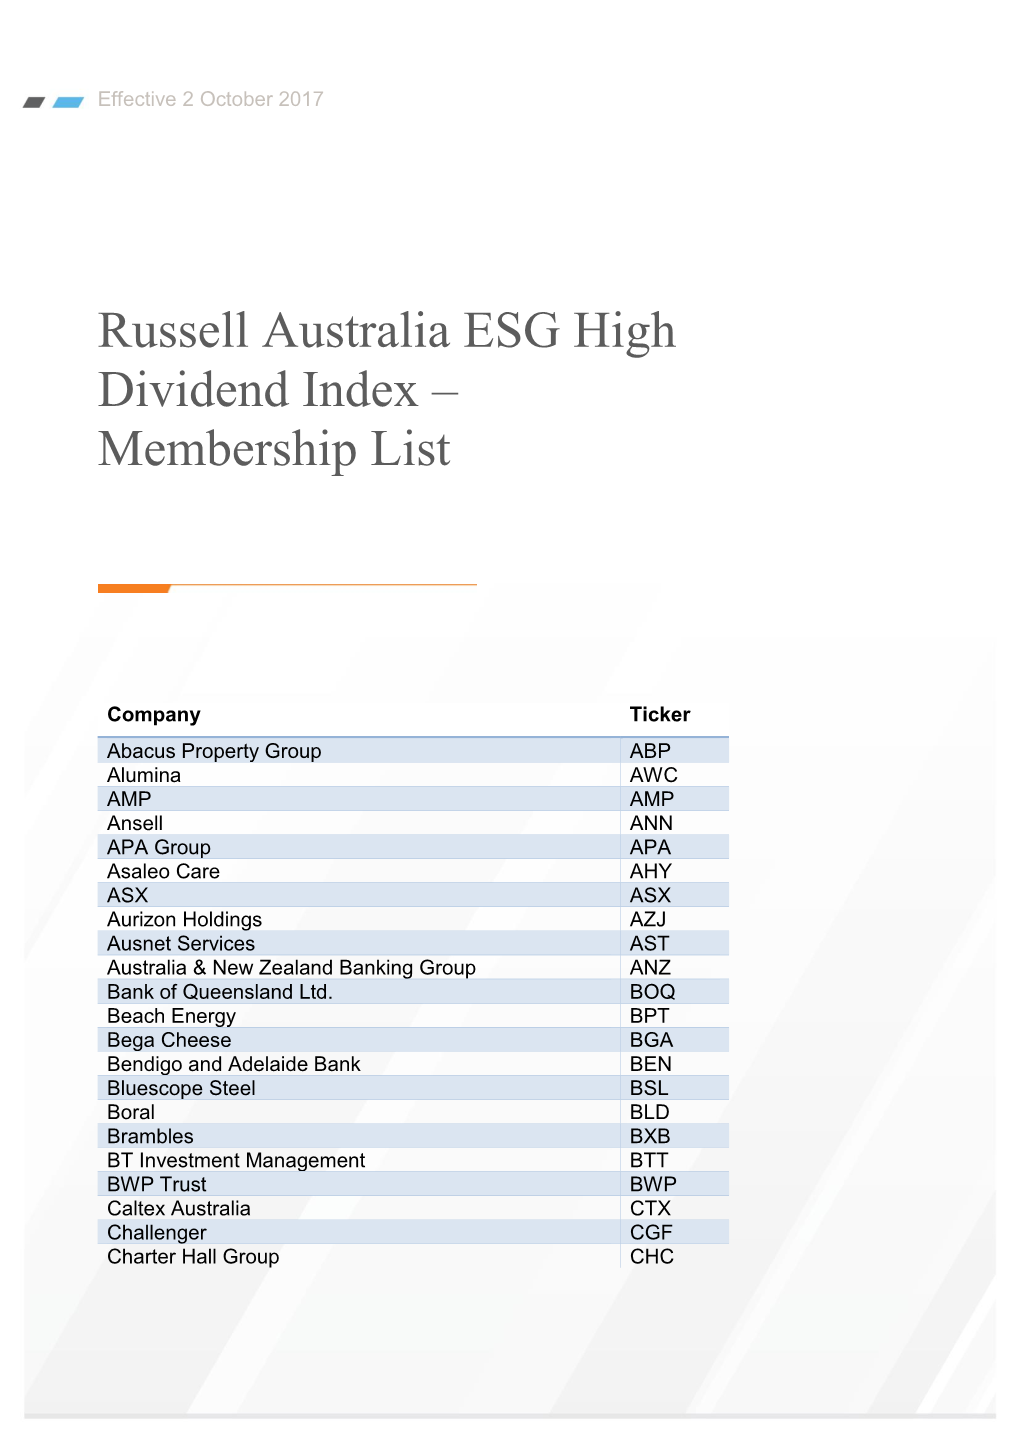 Russell Australia ESG High Dividend Index – Membership List